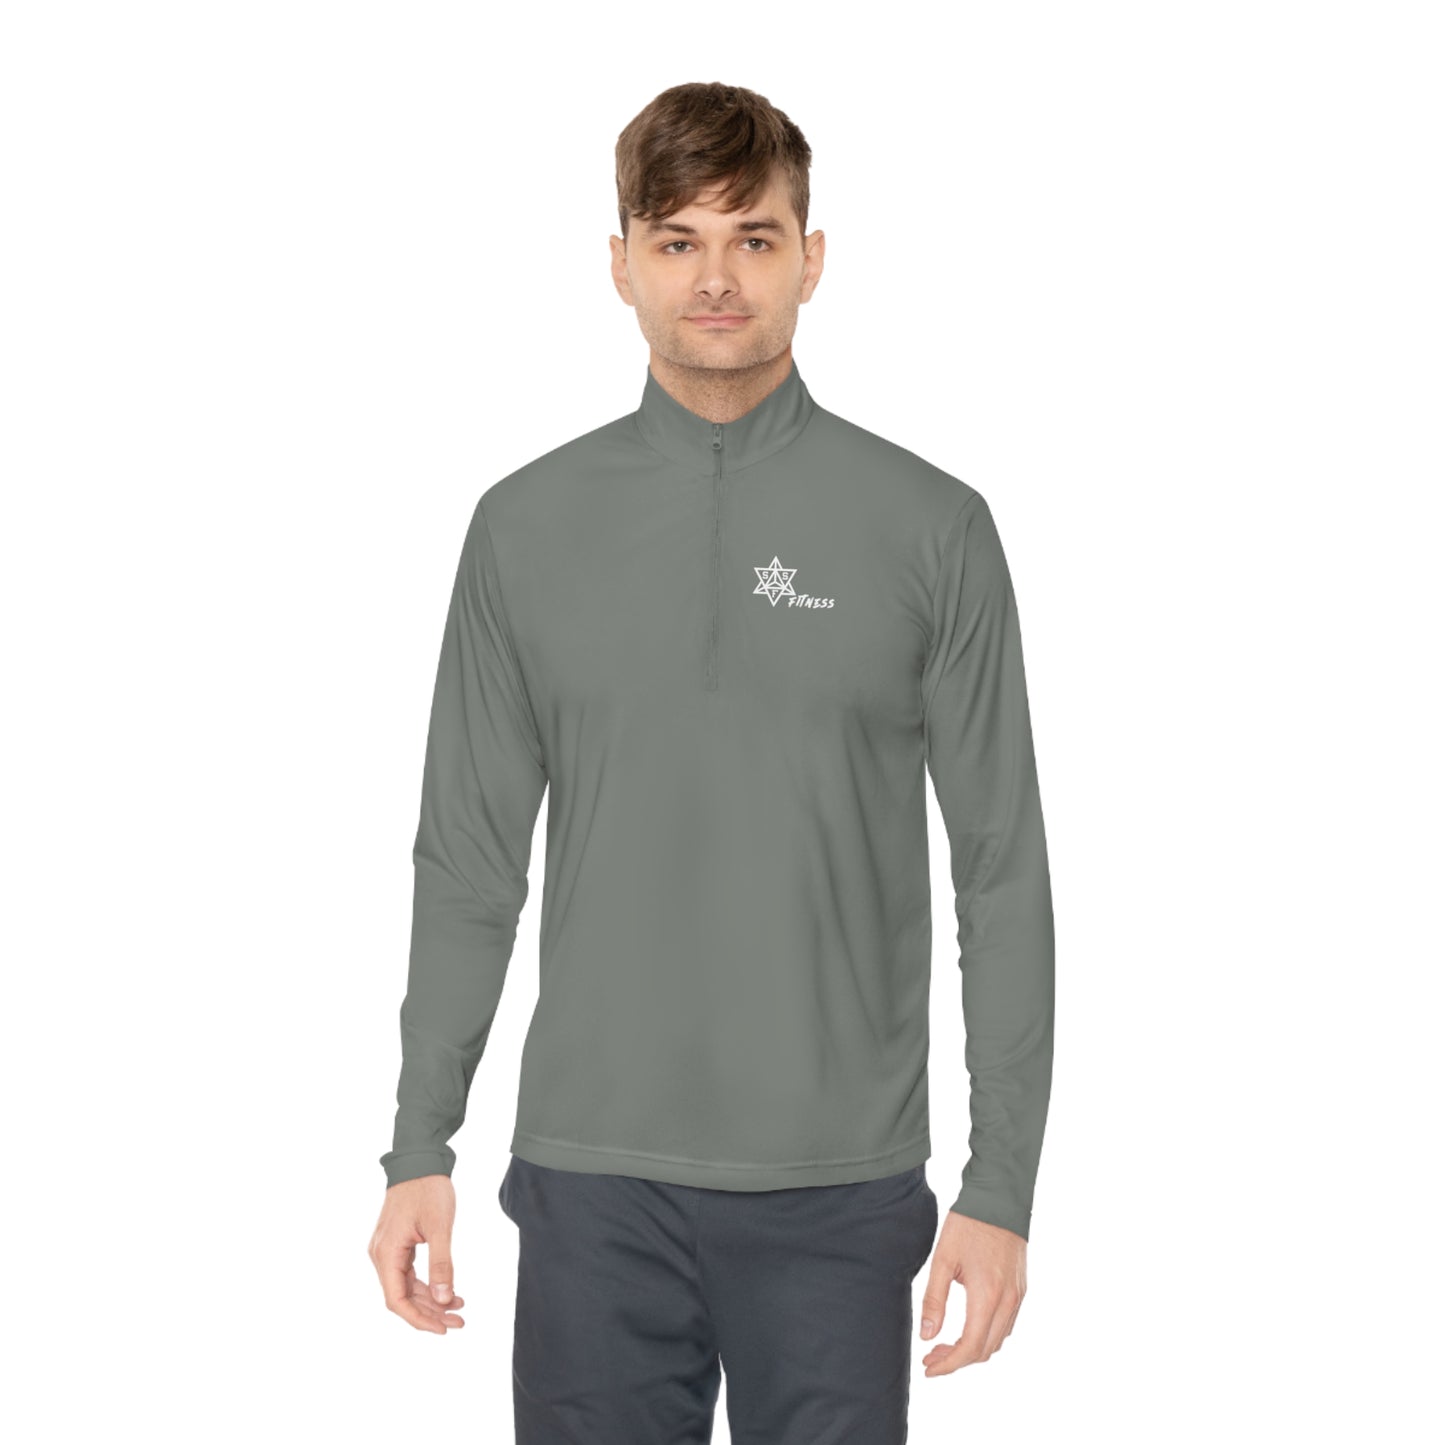 SSF Fitness Unisex Quarter-Zip Pullover